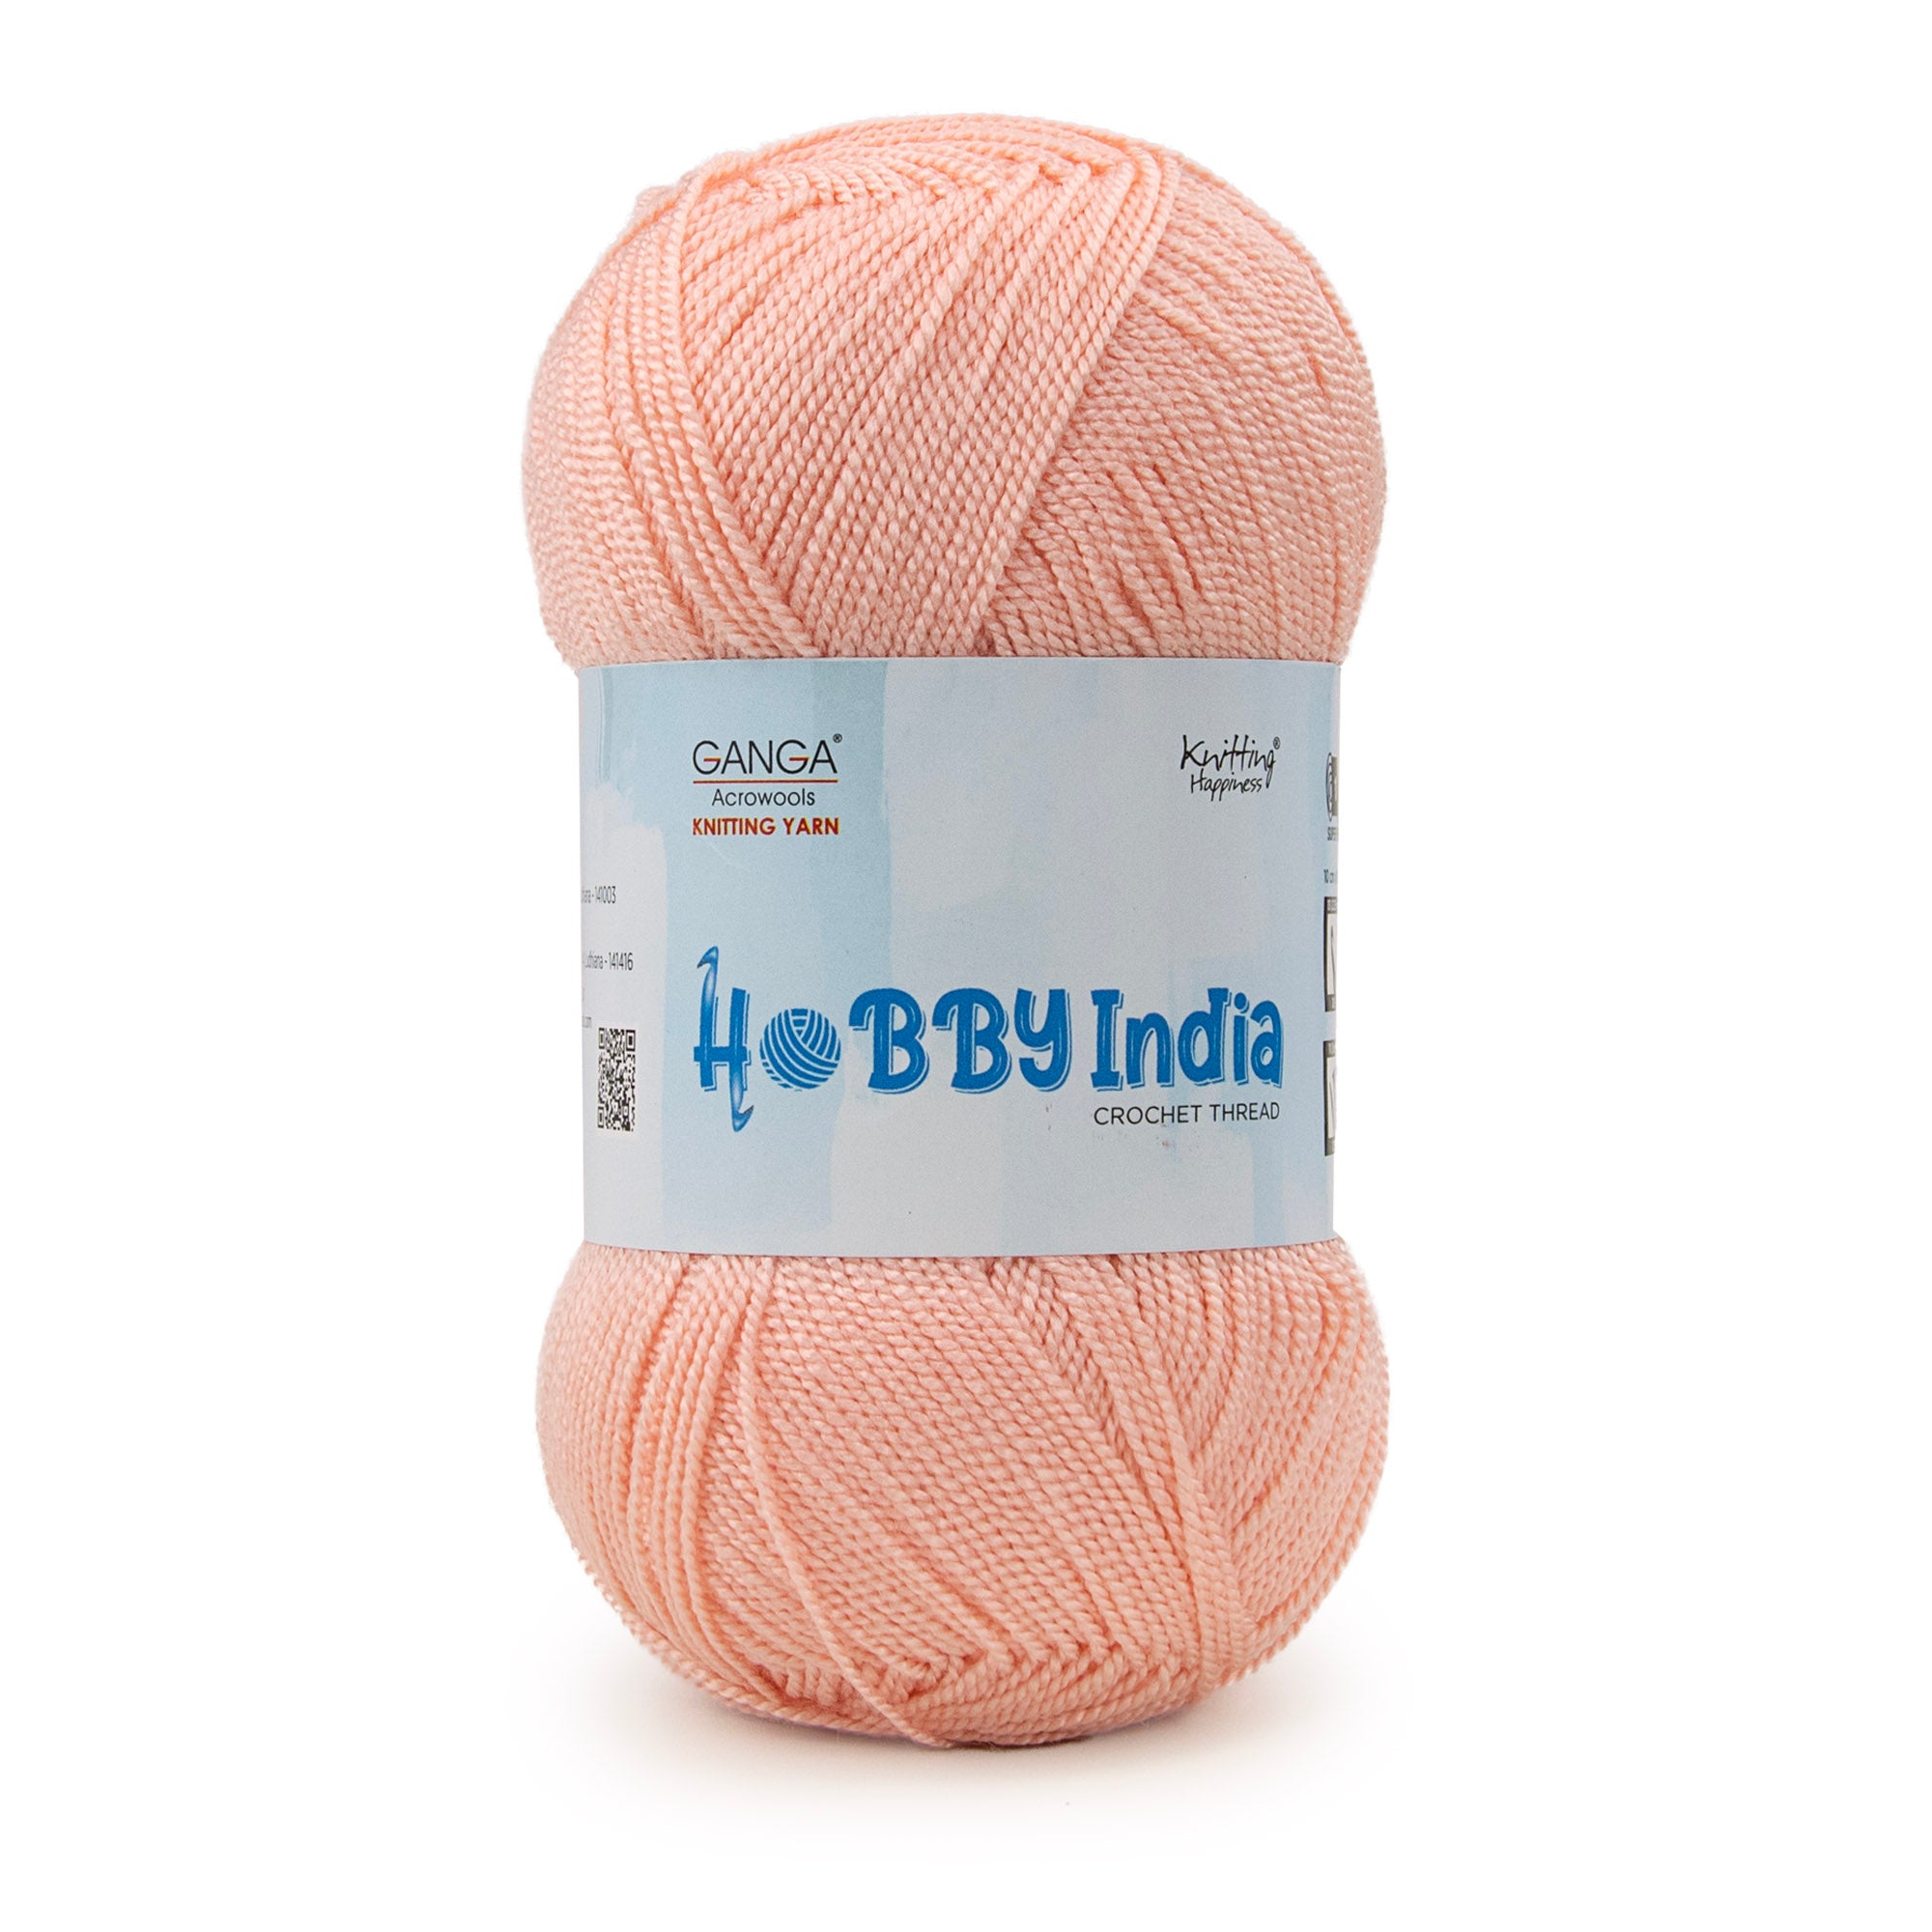 Hobby India Crochet Thread